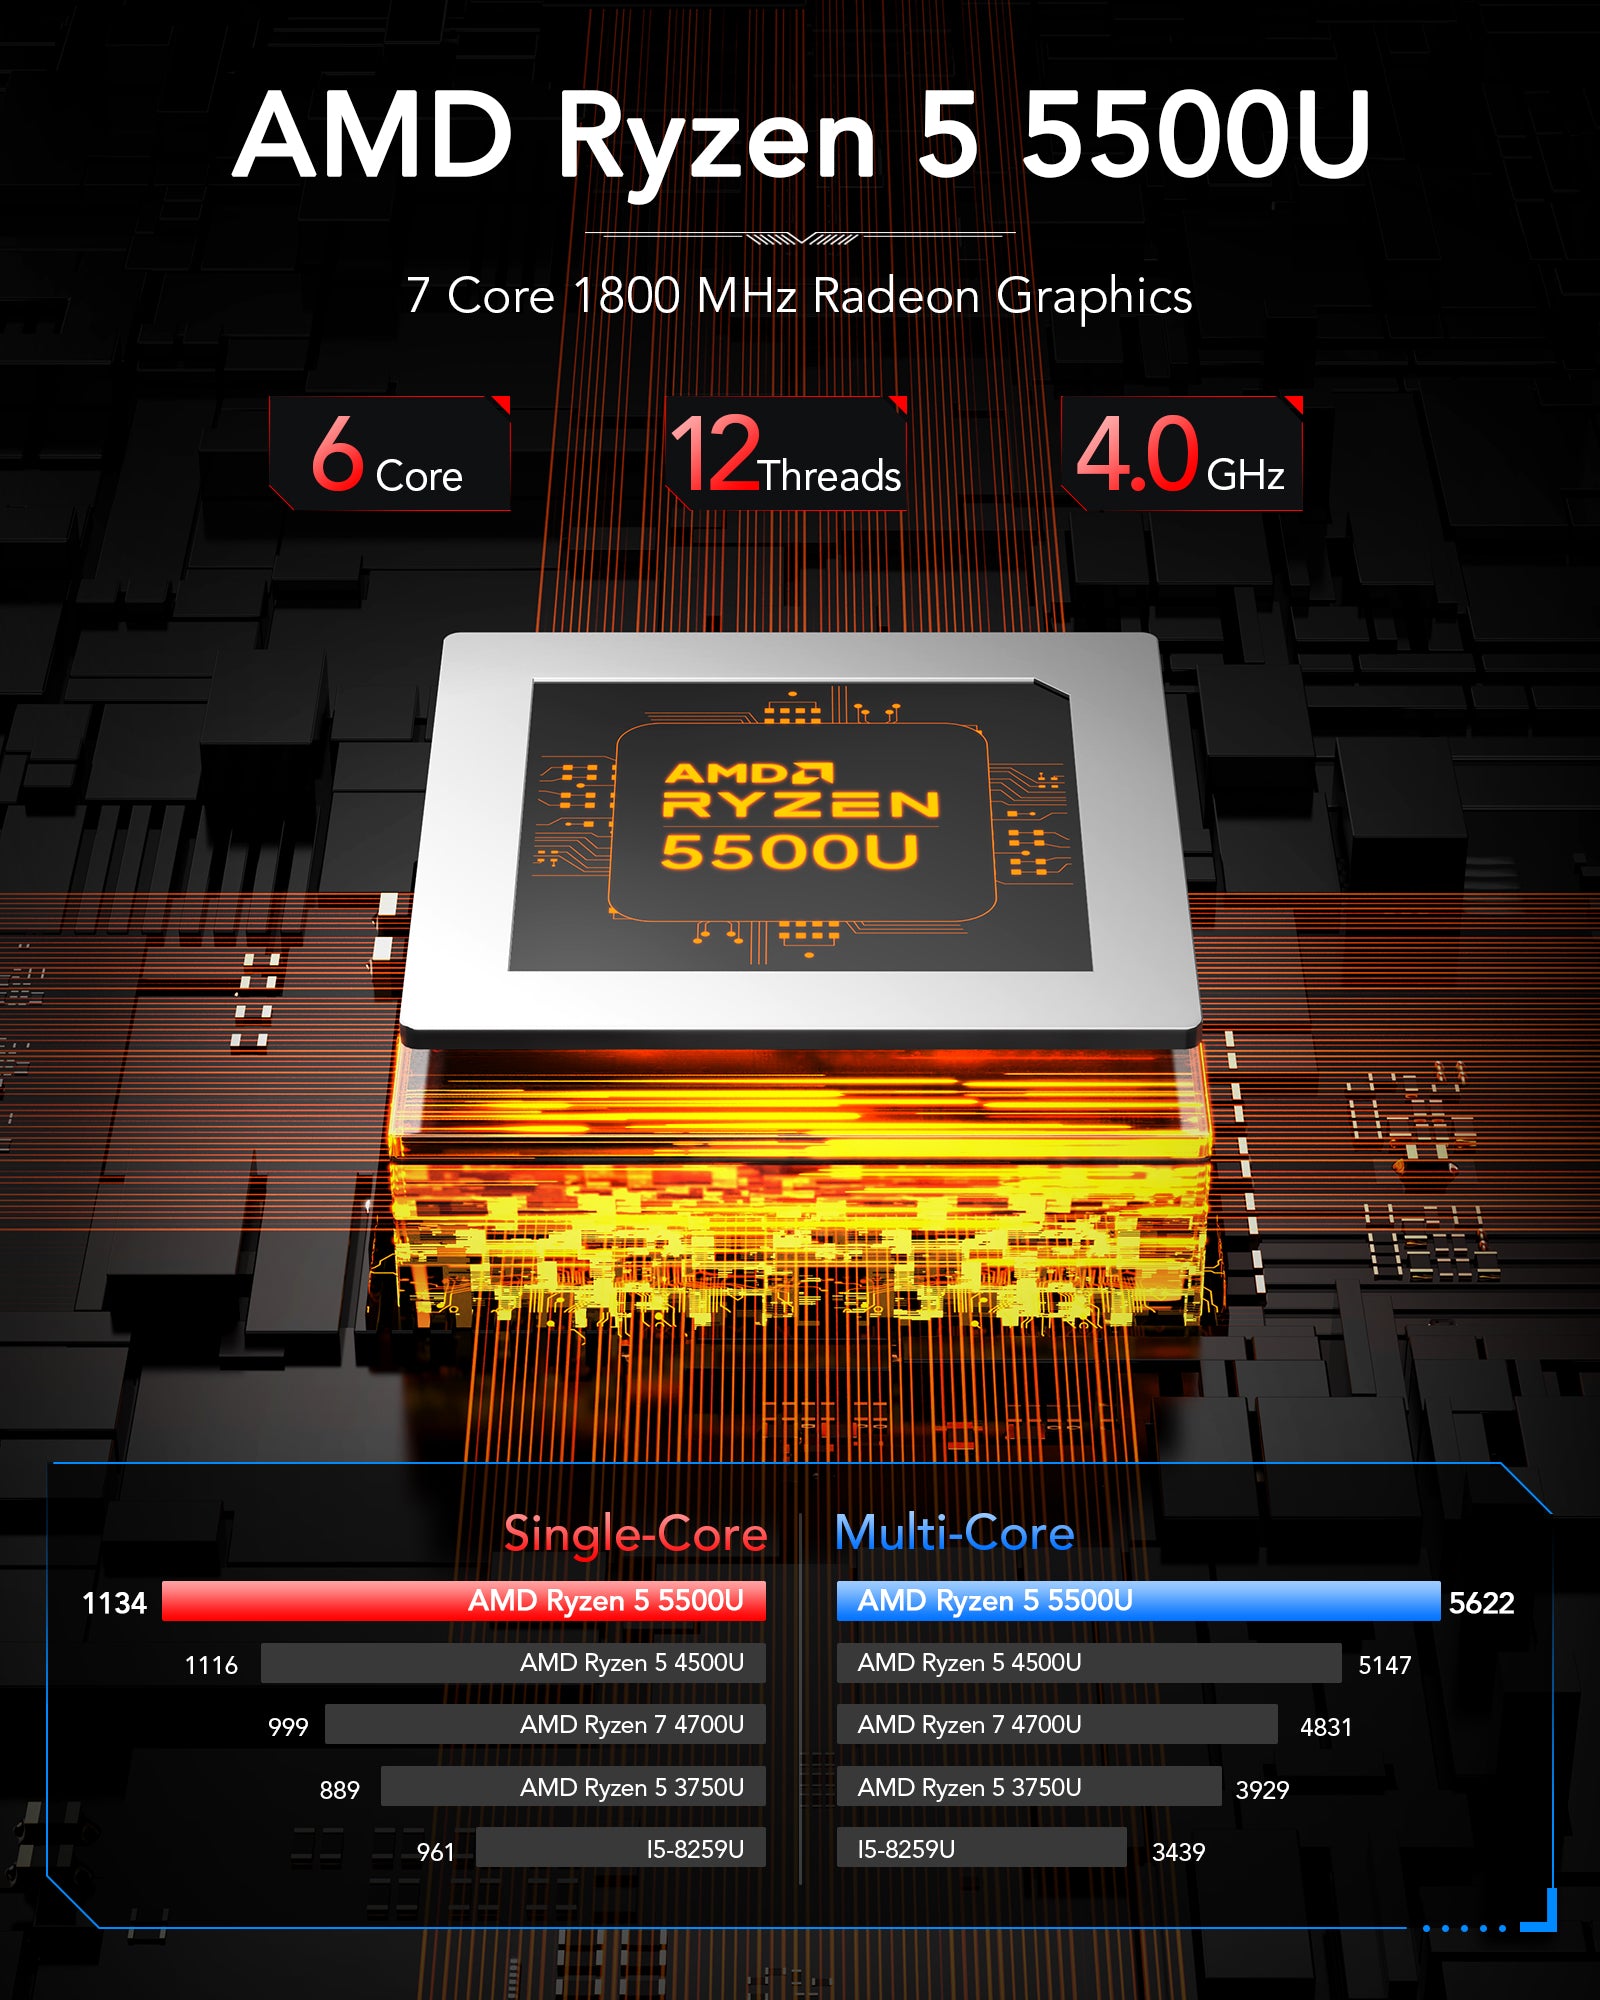 KAMRUI Mini PC,AMD Ryzen 5 3500U Windows 11 Pro Small Desktop Computer